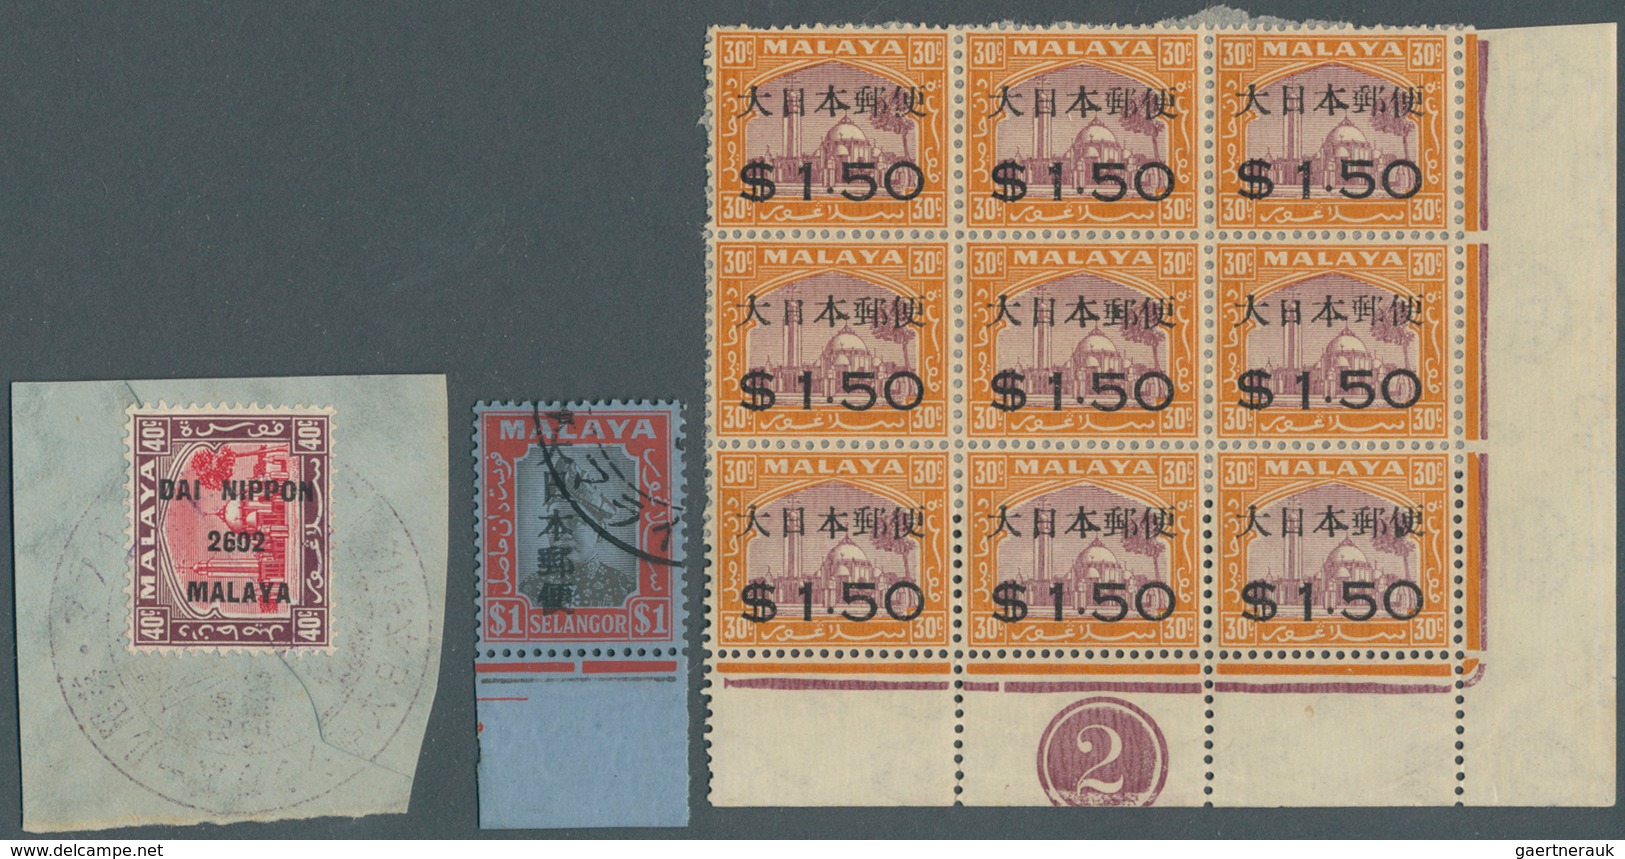 22949 Japanische Besetzung  WK II - Malaya: General issues, Selangor, 1942, ovpts T2 resp. T16/24 mint and